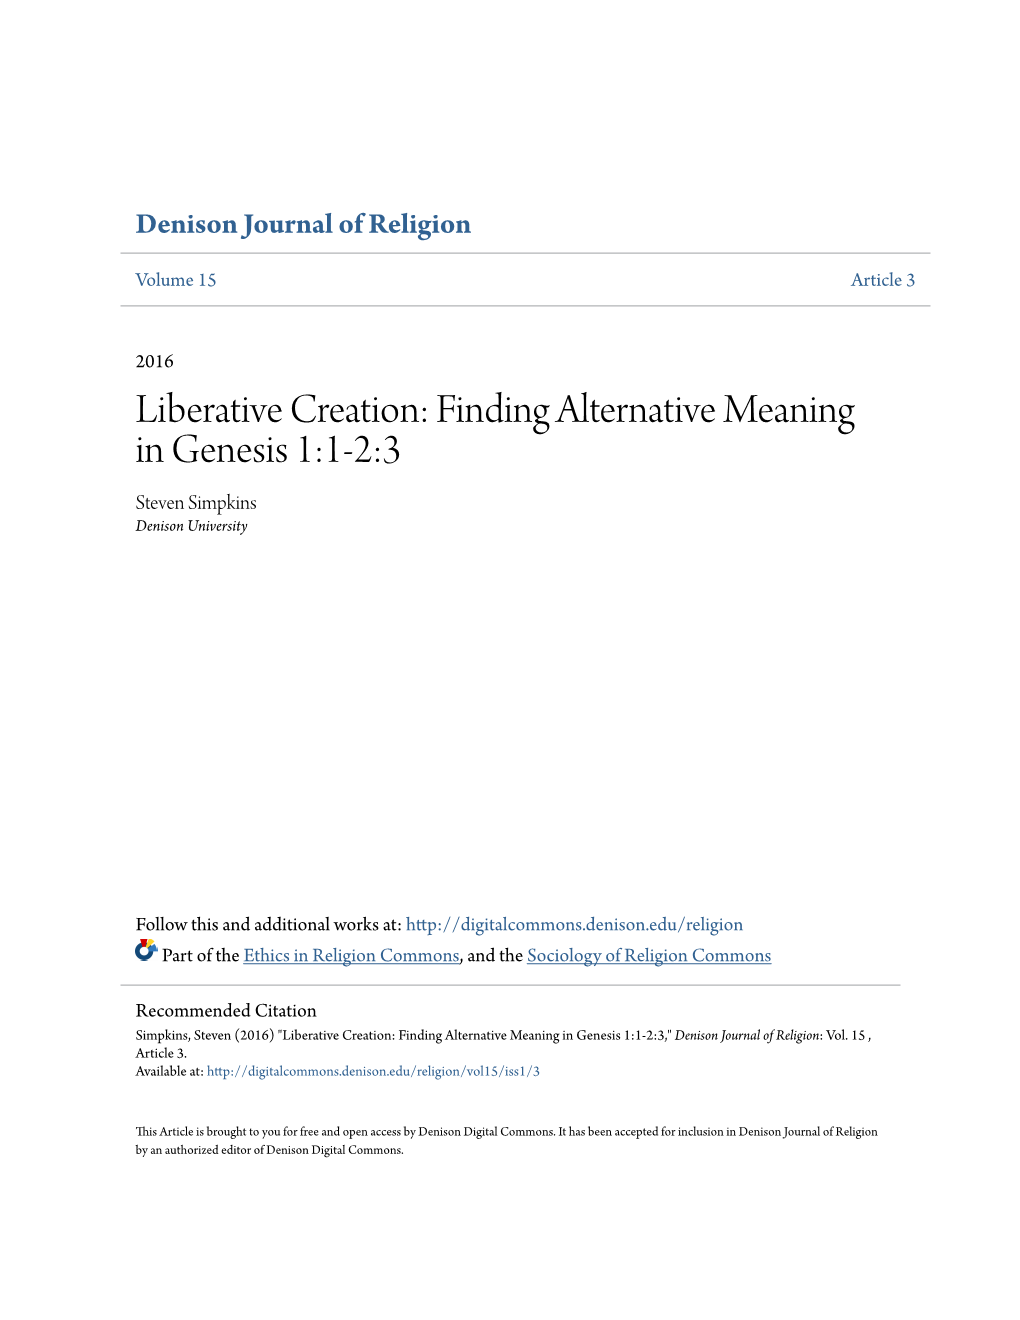 Liberative Creation: Finding Alternative Meaning in Genesis 1:1-2:3 Steven Simpkins Denison University